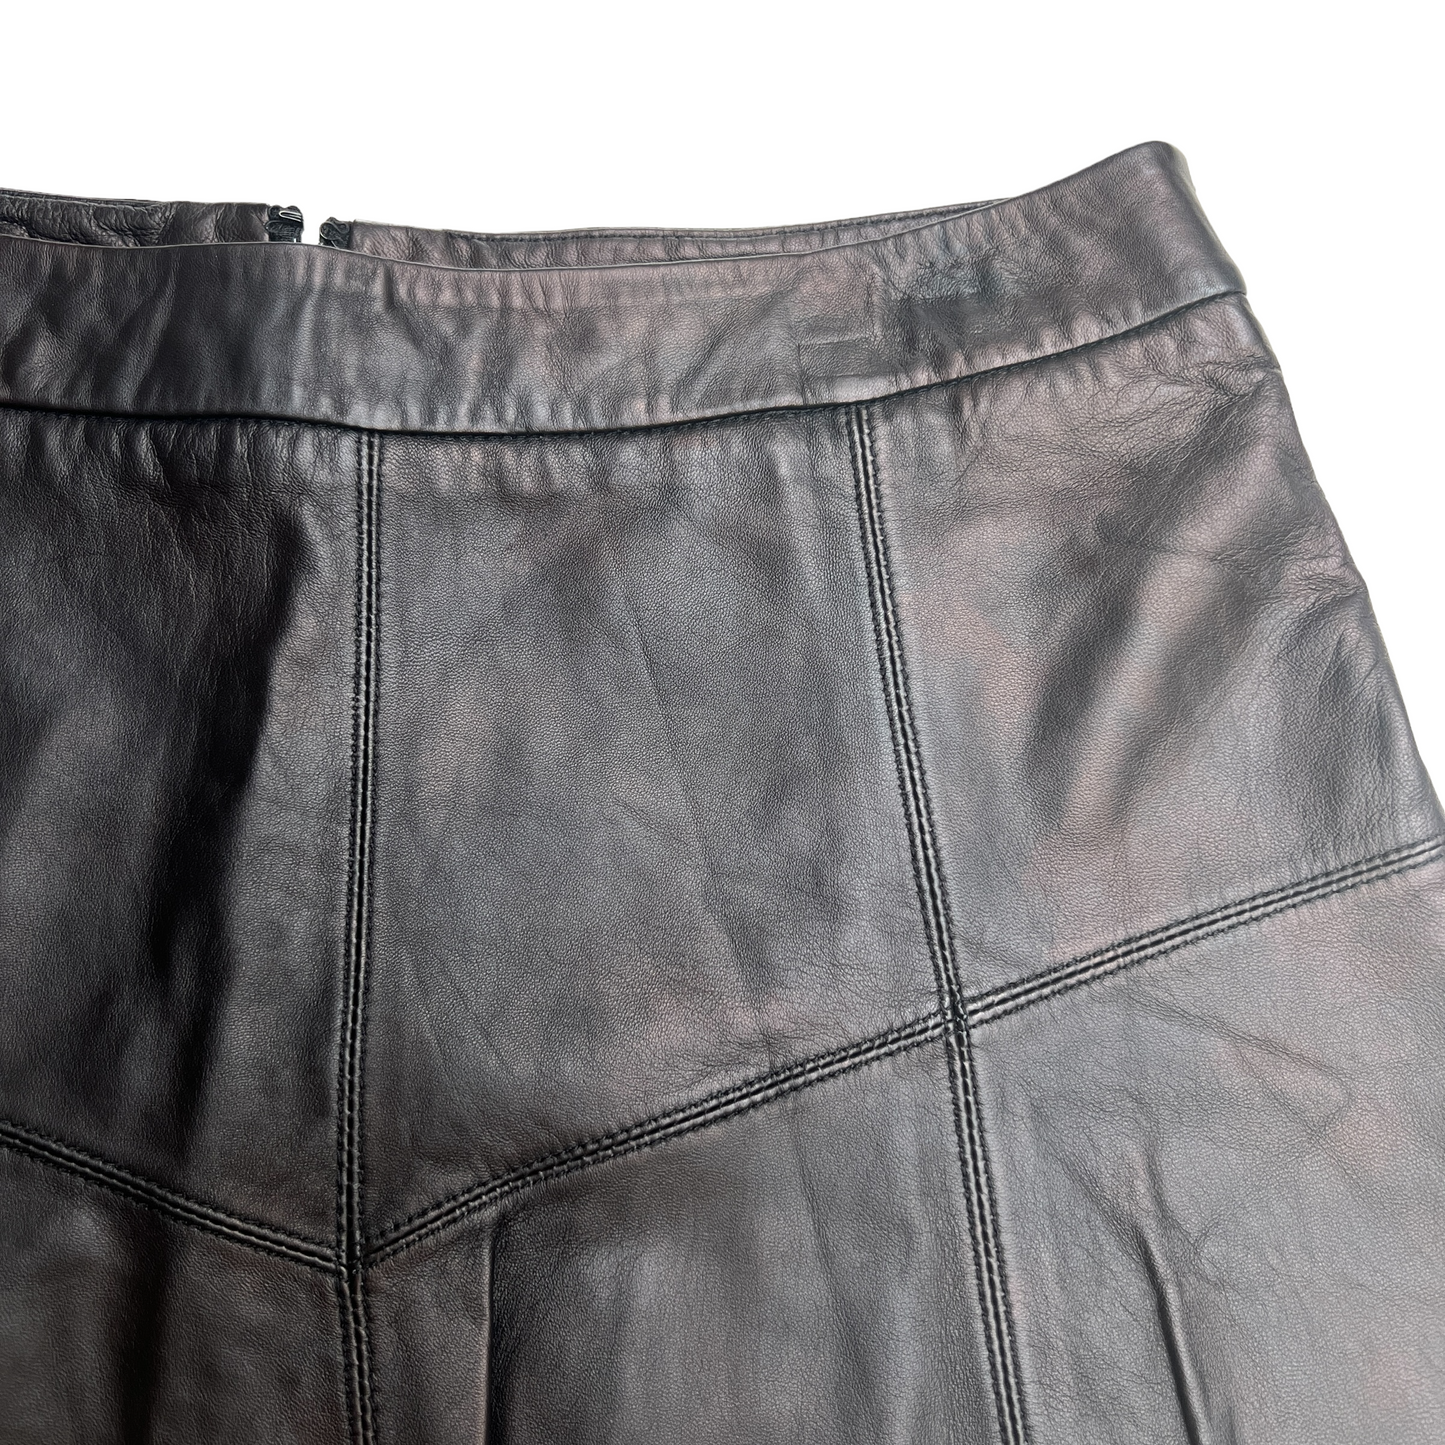 Black Leather Mini Skirt - M